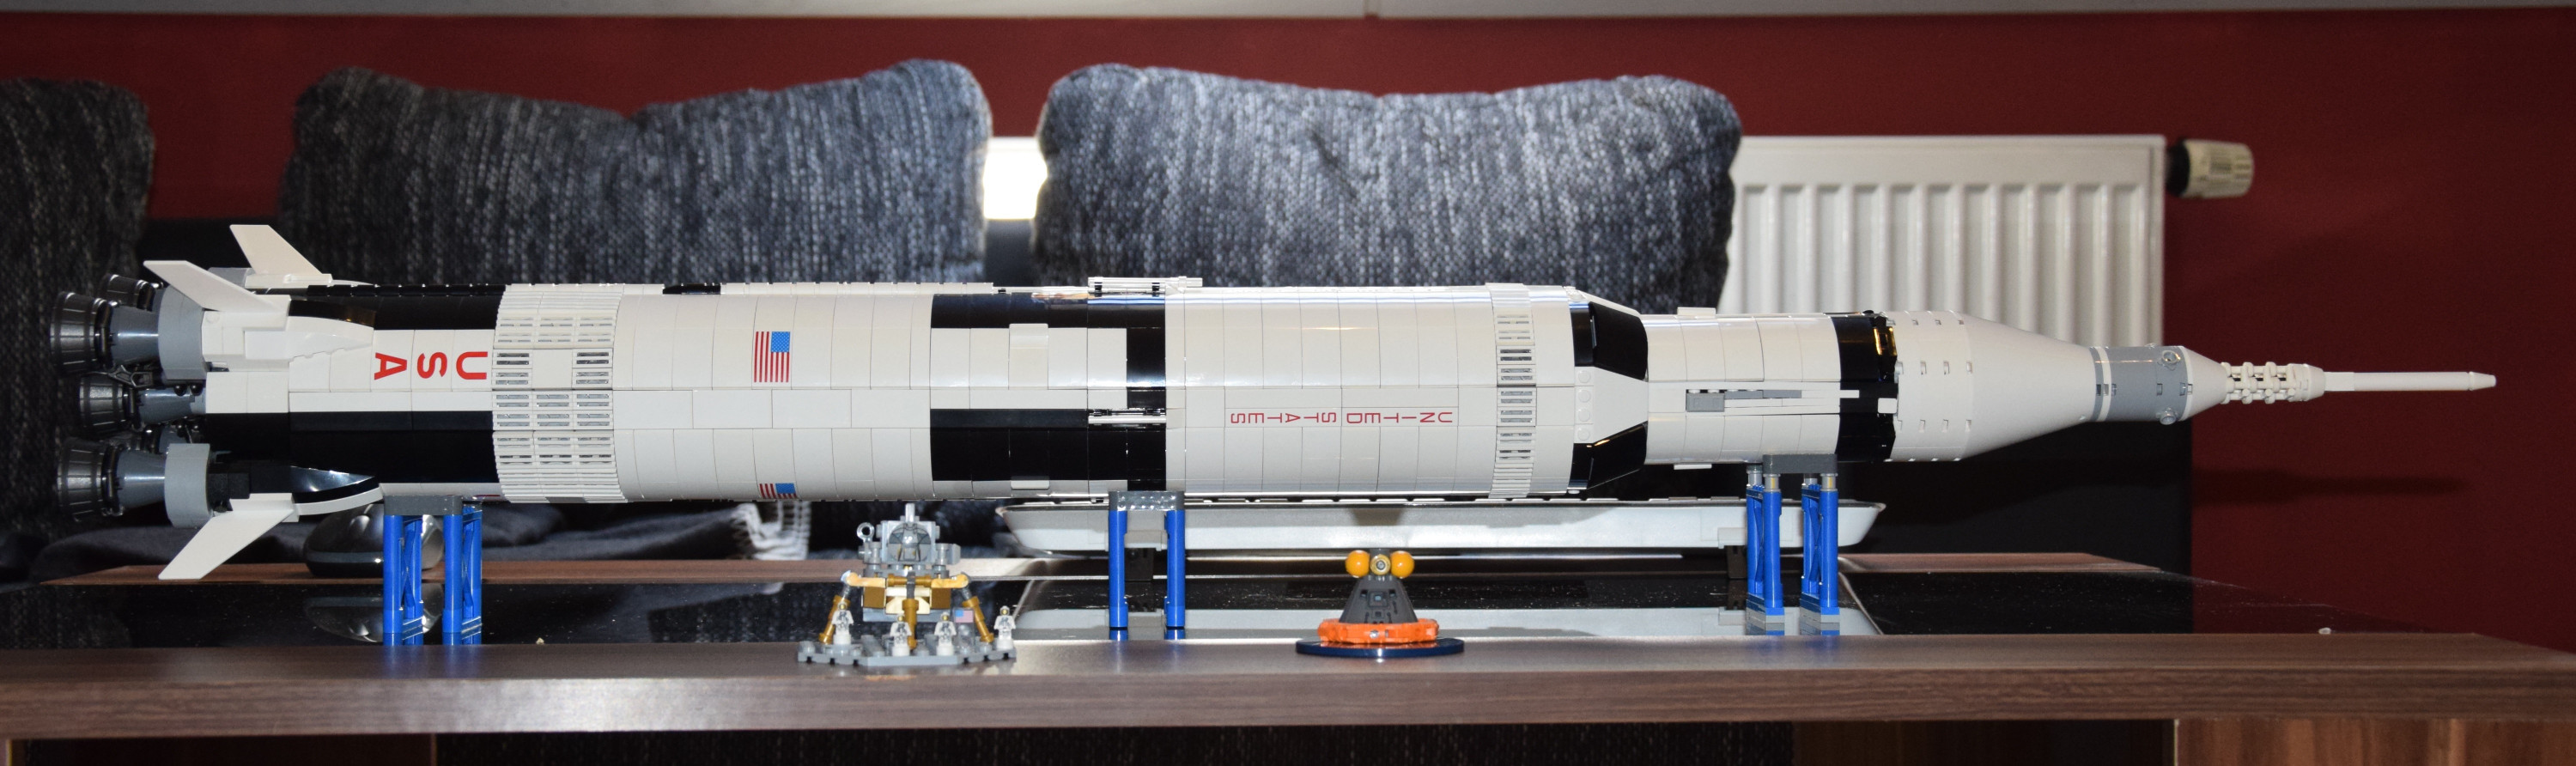 Lego Saturn V